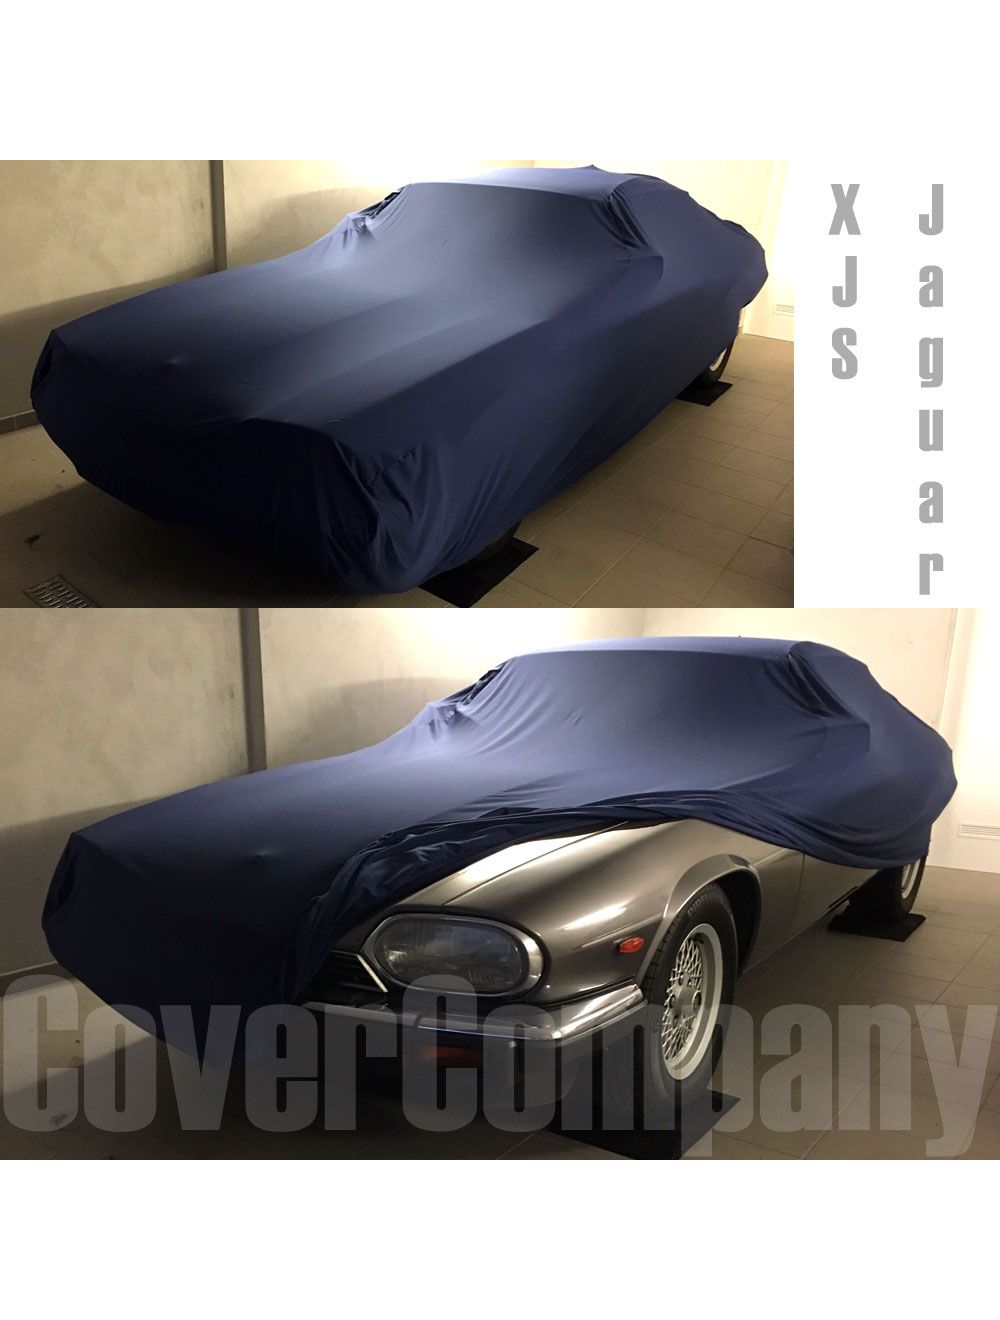  Jaguar F-Type Indoor Car Cover Ultraguard Stretch